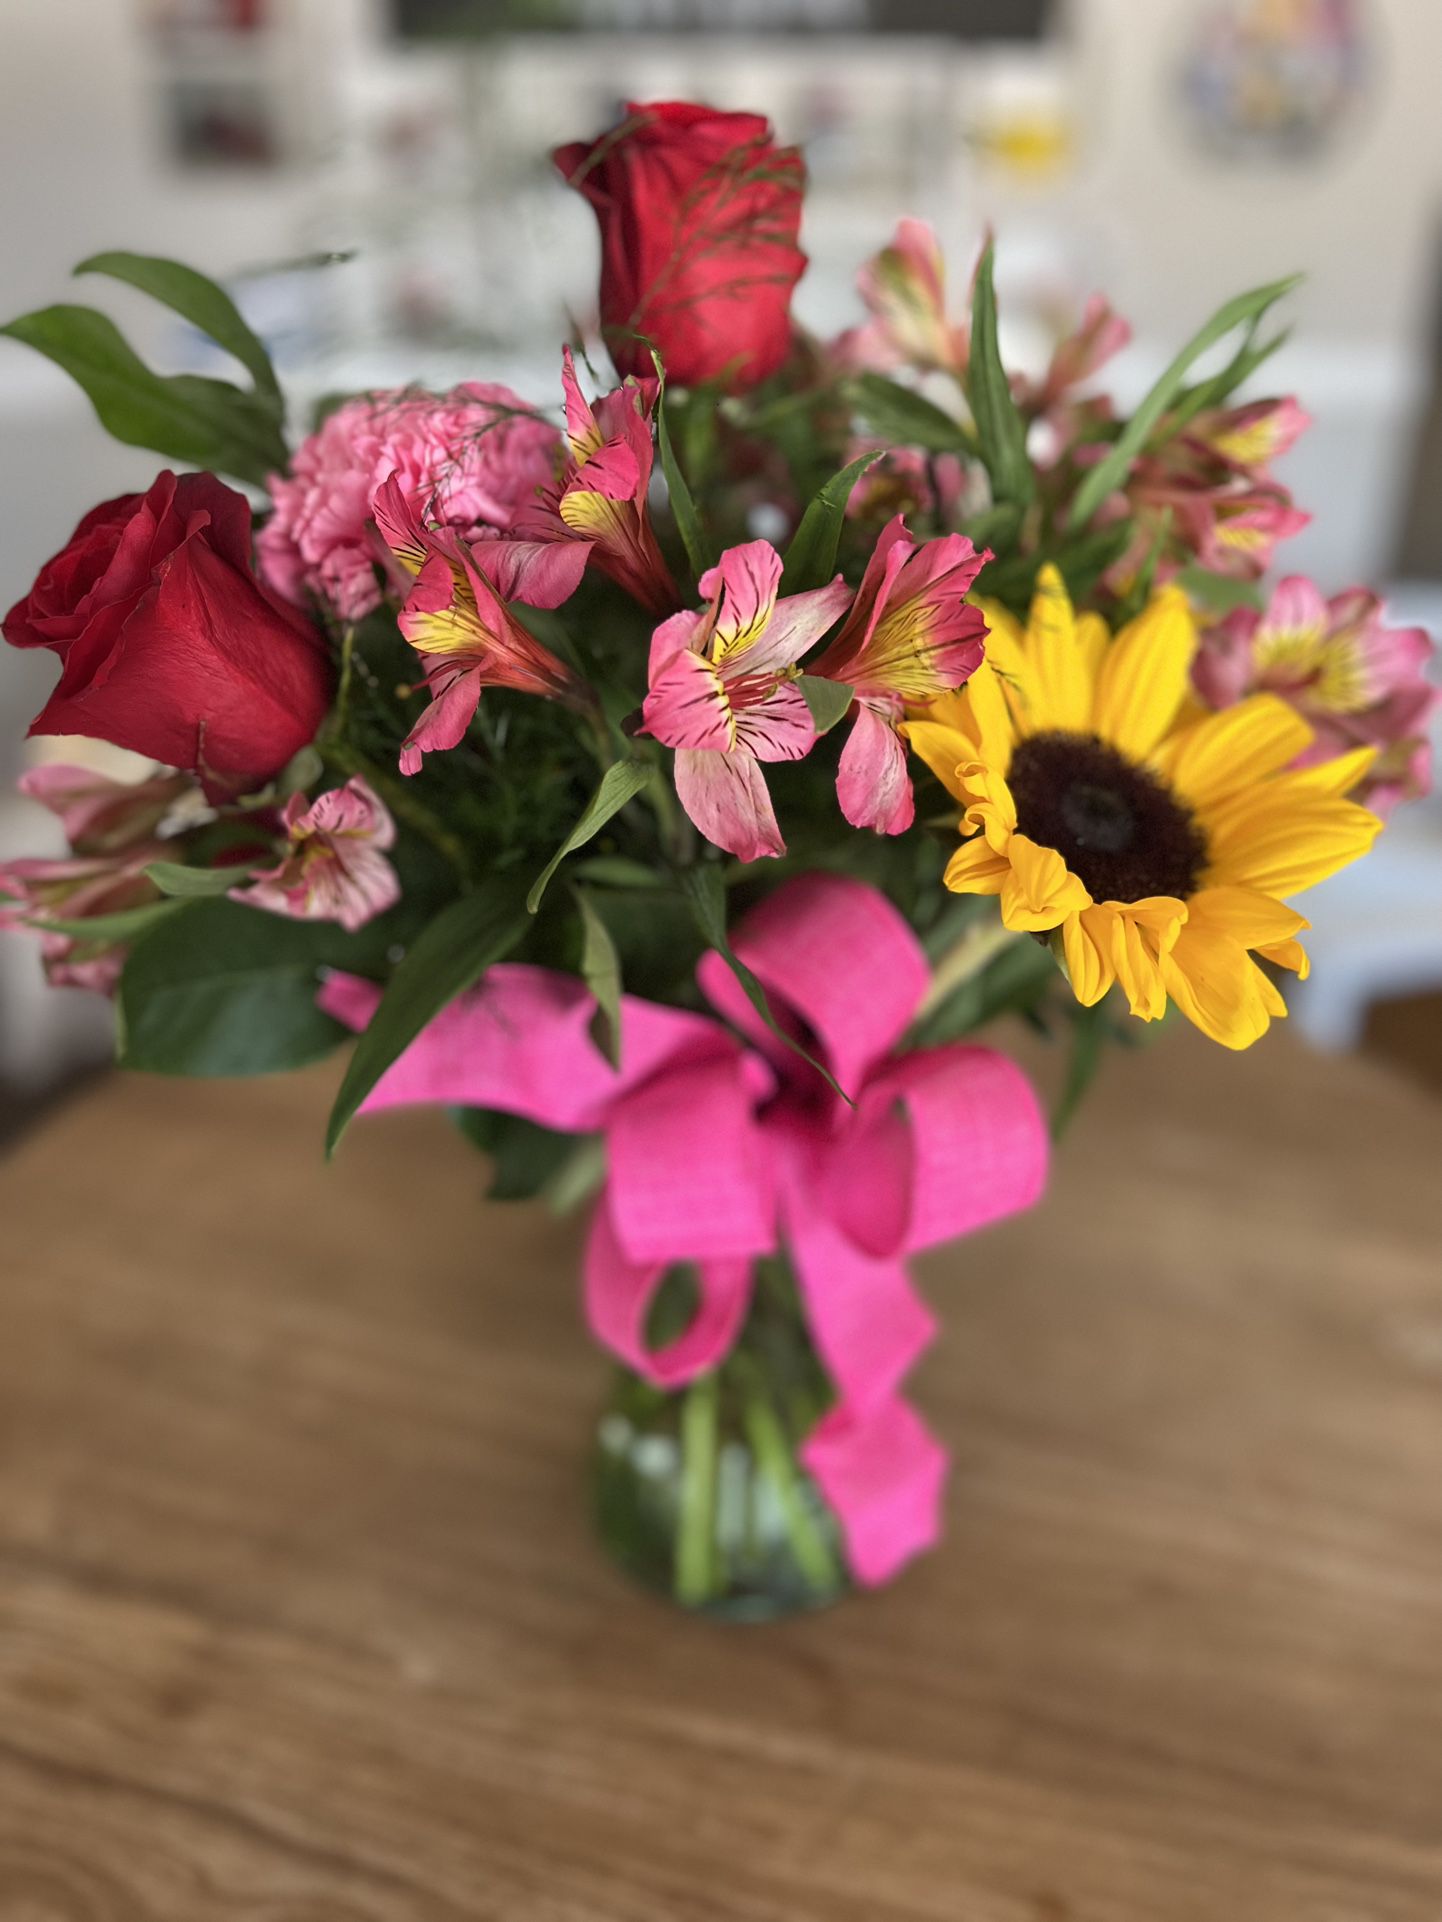 Flower Arrangements and Candy bouquets 